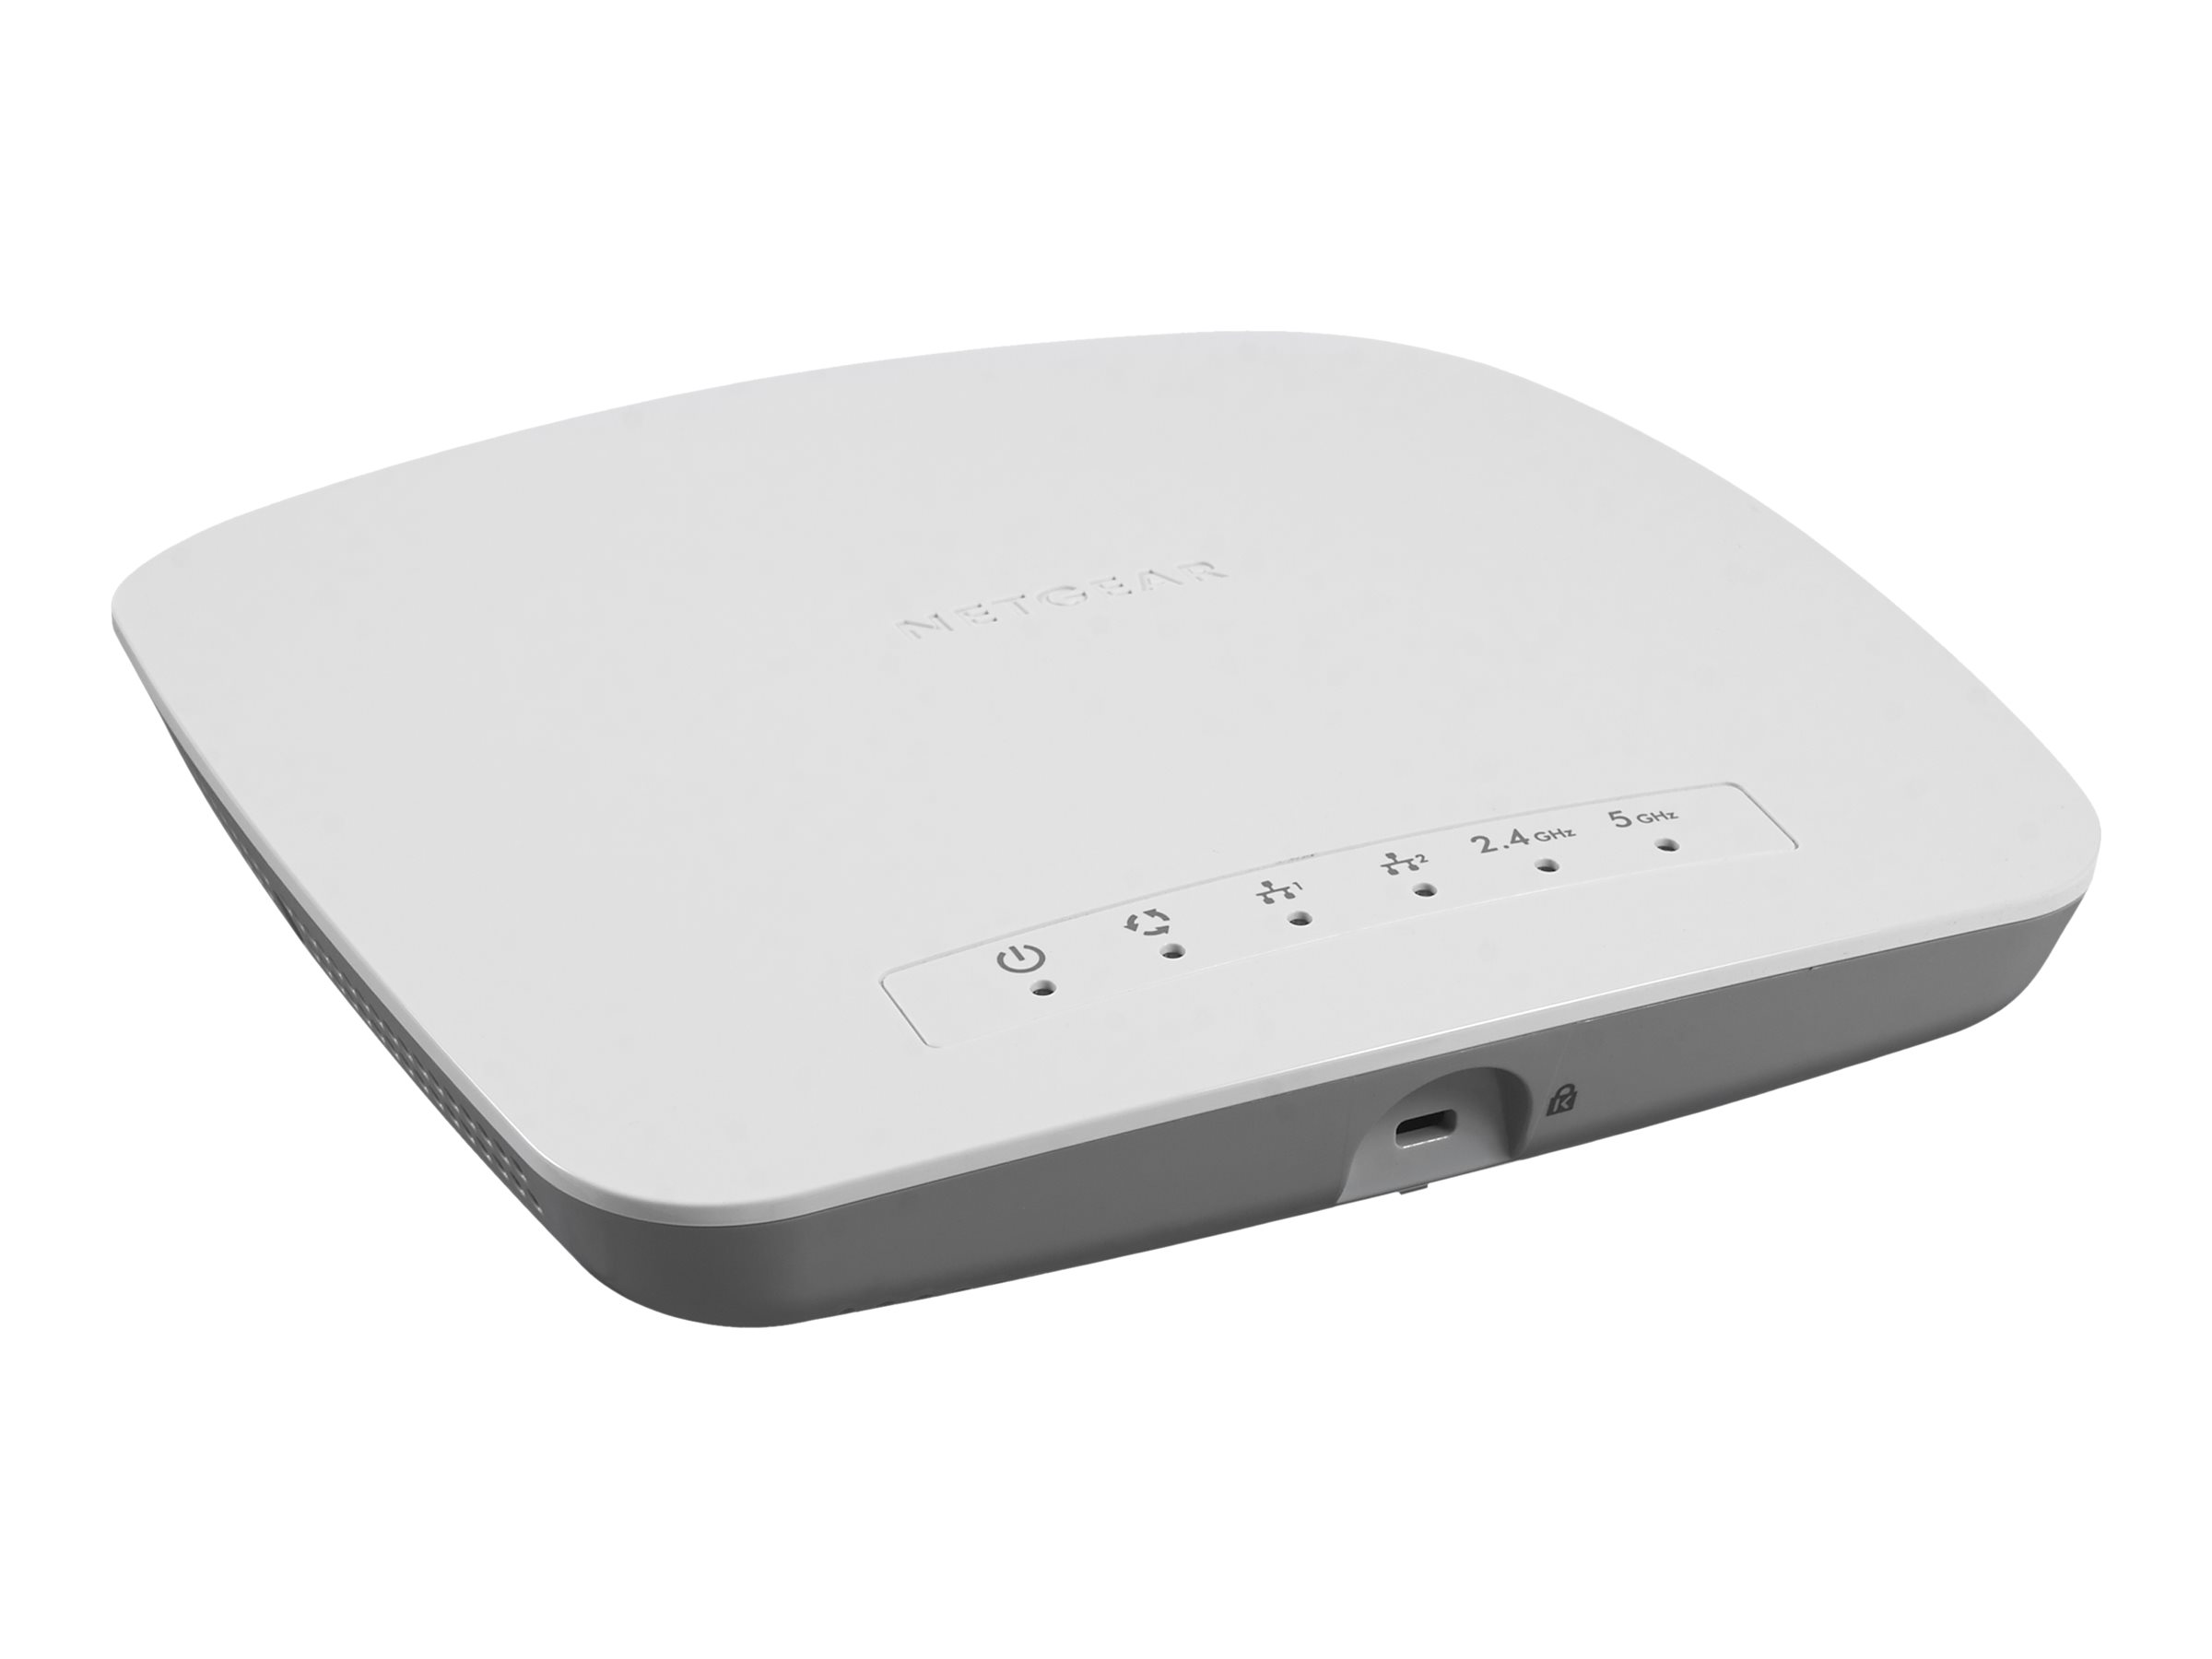 NETGEAR Insight Managed Smart Cloud (WAC510) - Wireless Router - 1GbE - Wi-Fi 5 - Dual-Band - wandmontierbar, deckenmontierbar (